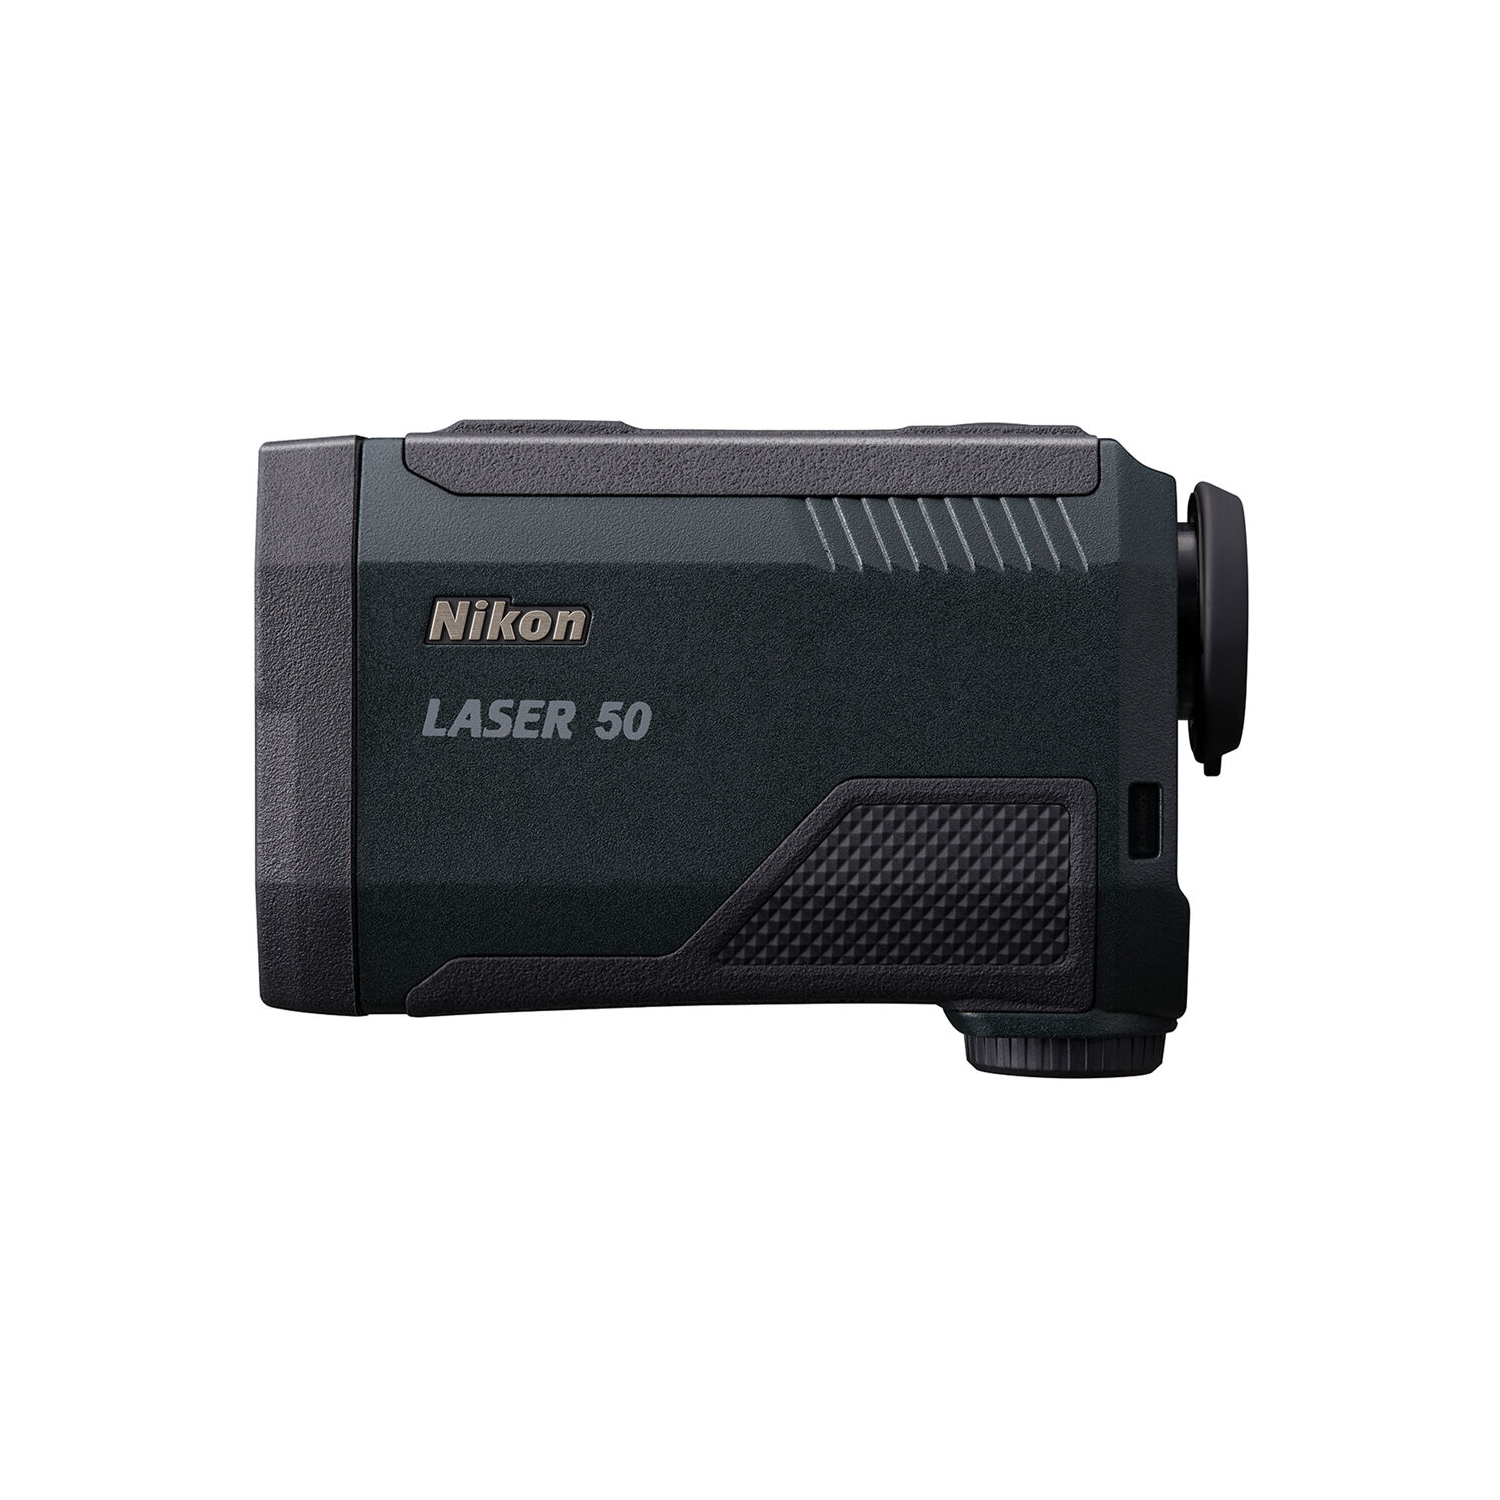 Nikon LASER 50 Laser Golf Rangefinder - 6x21 (10-2,000yds)